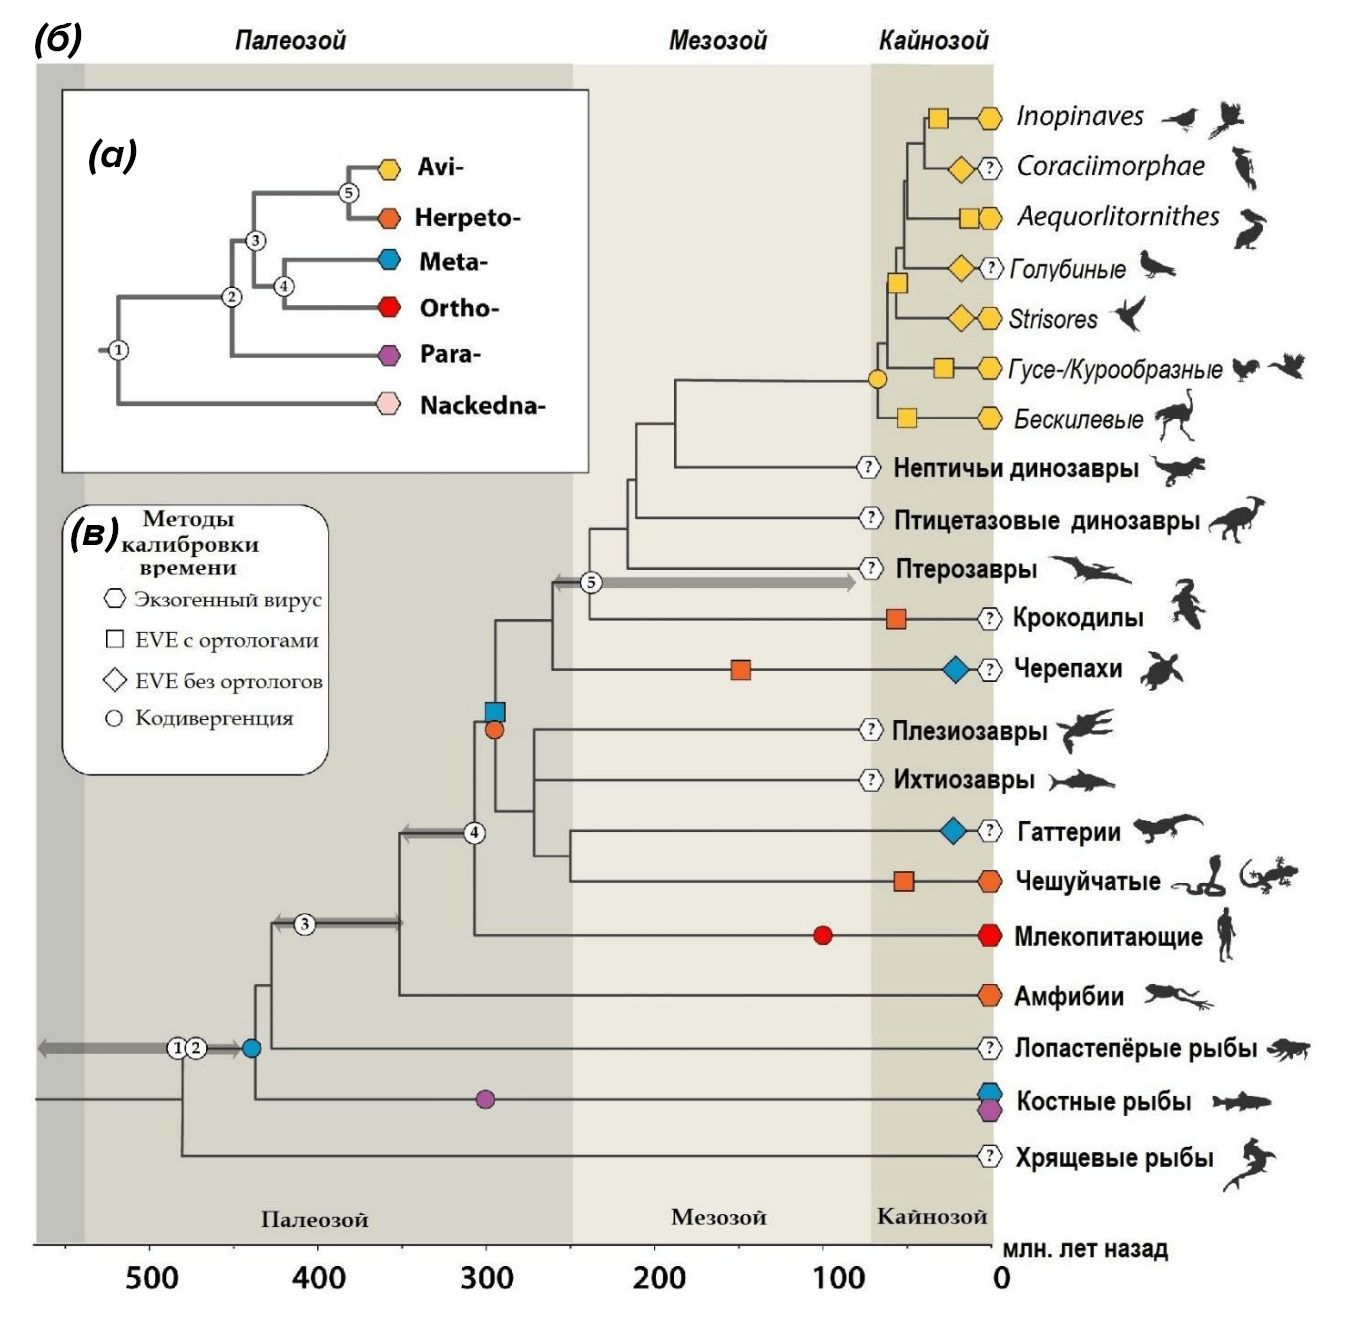 Хронология эволюции гепаднавирусов